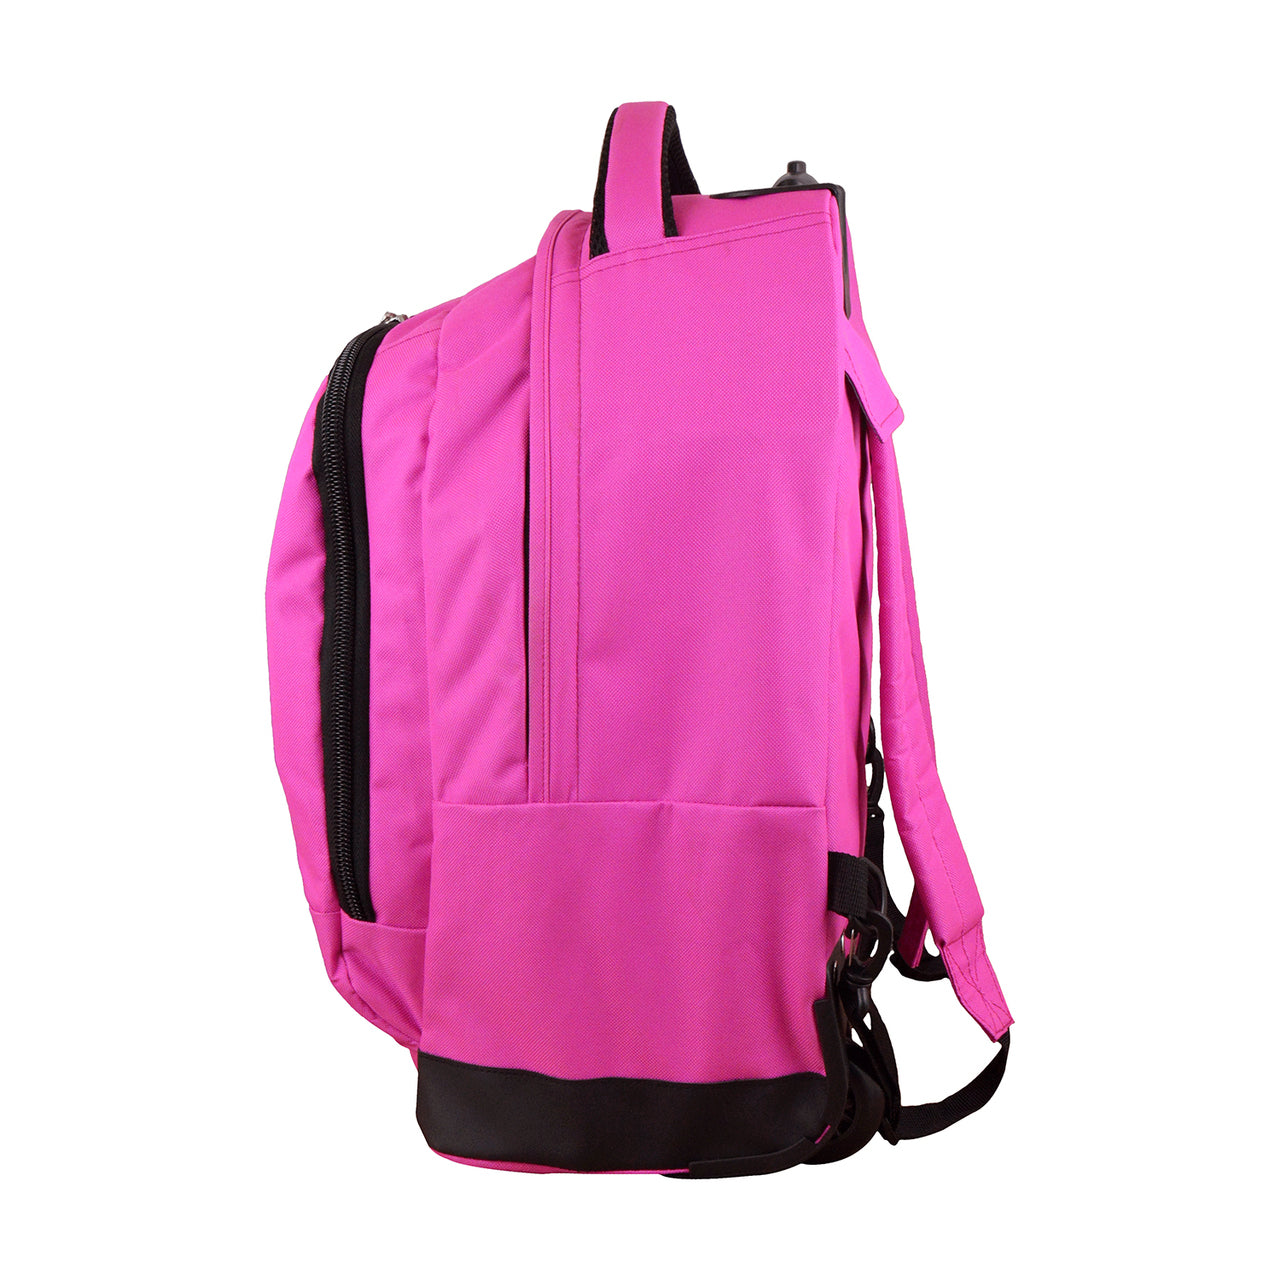 Florida Premium Wheeled Backpack in Pink